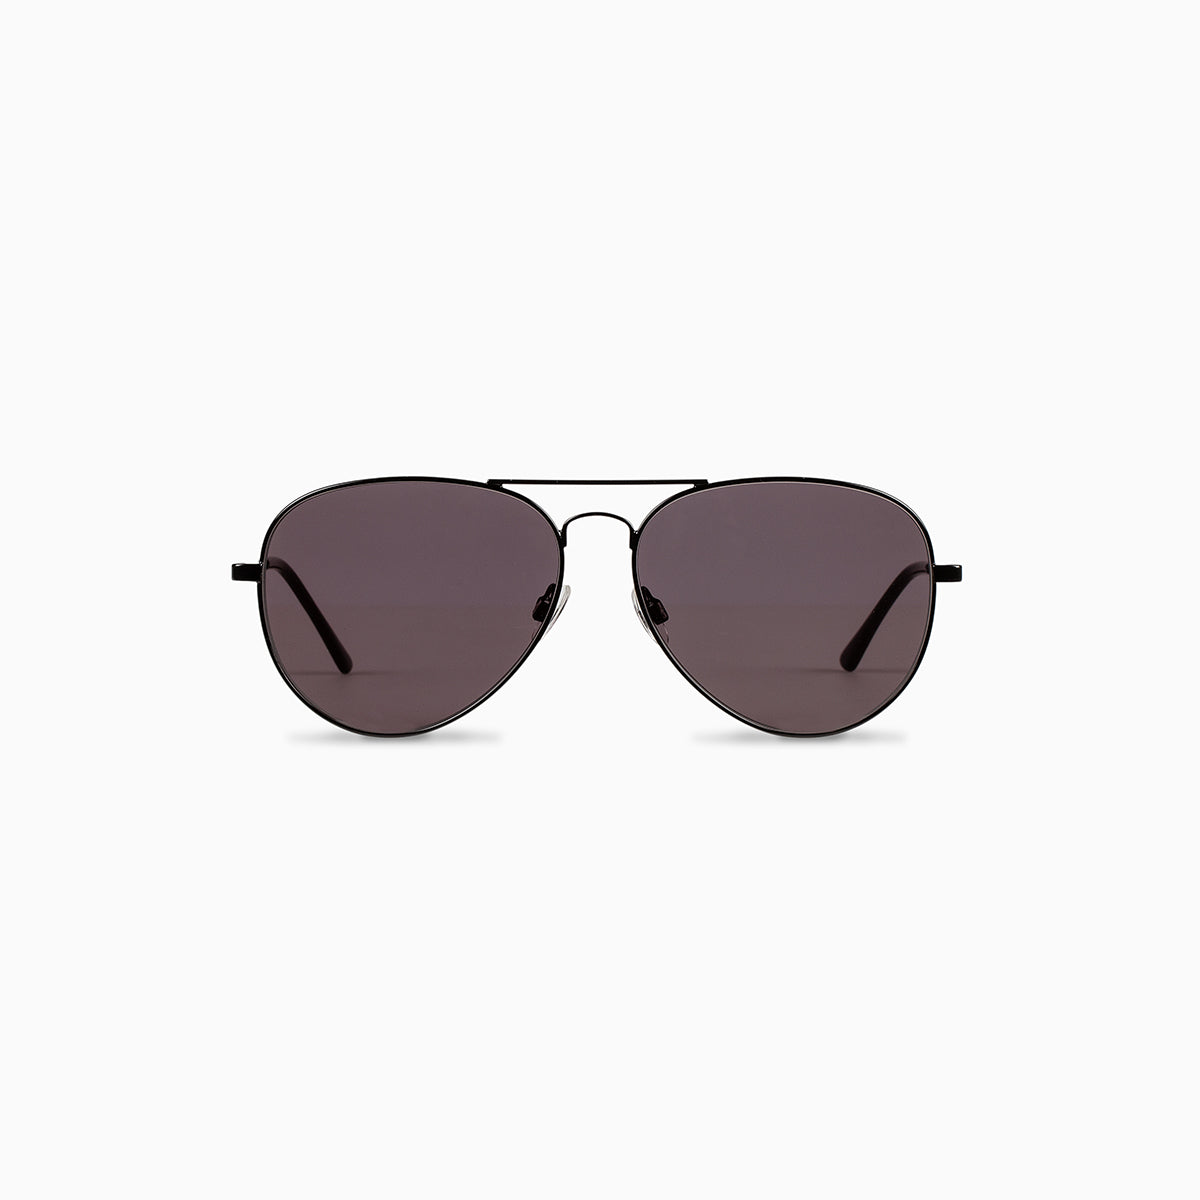 Buy zeroUV - Small Classic Aviator Sunglasses 50mm Aviators (Gold) at  Amazon.in